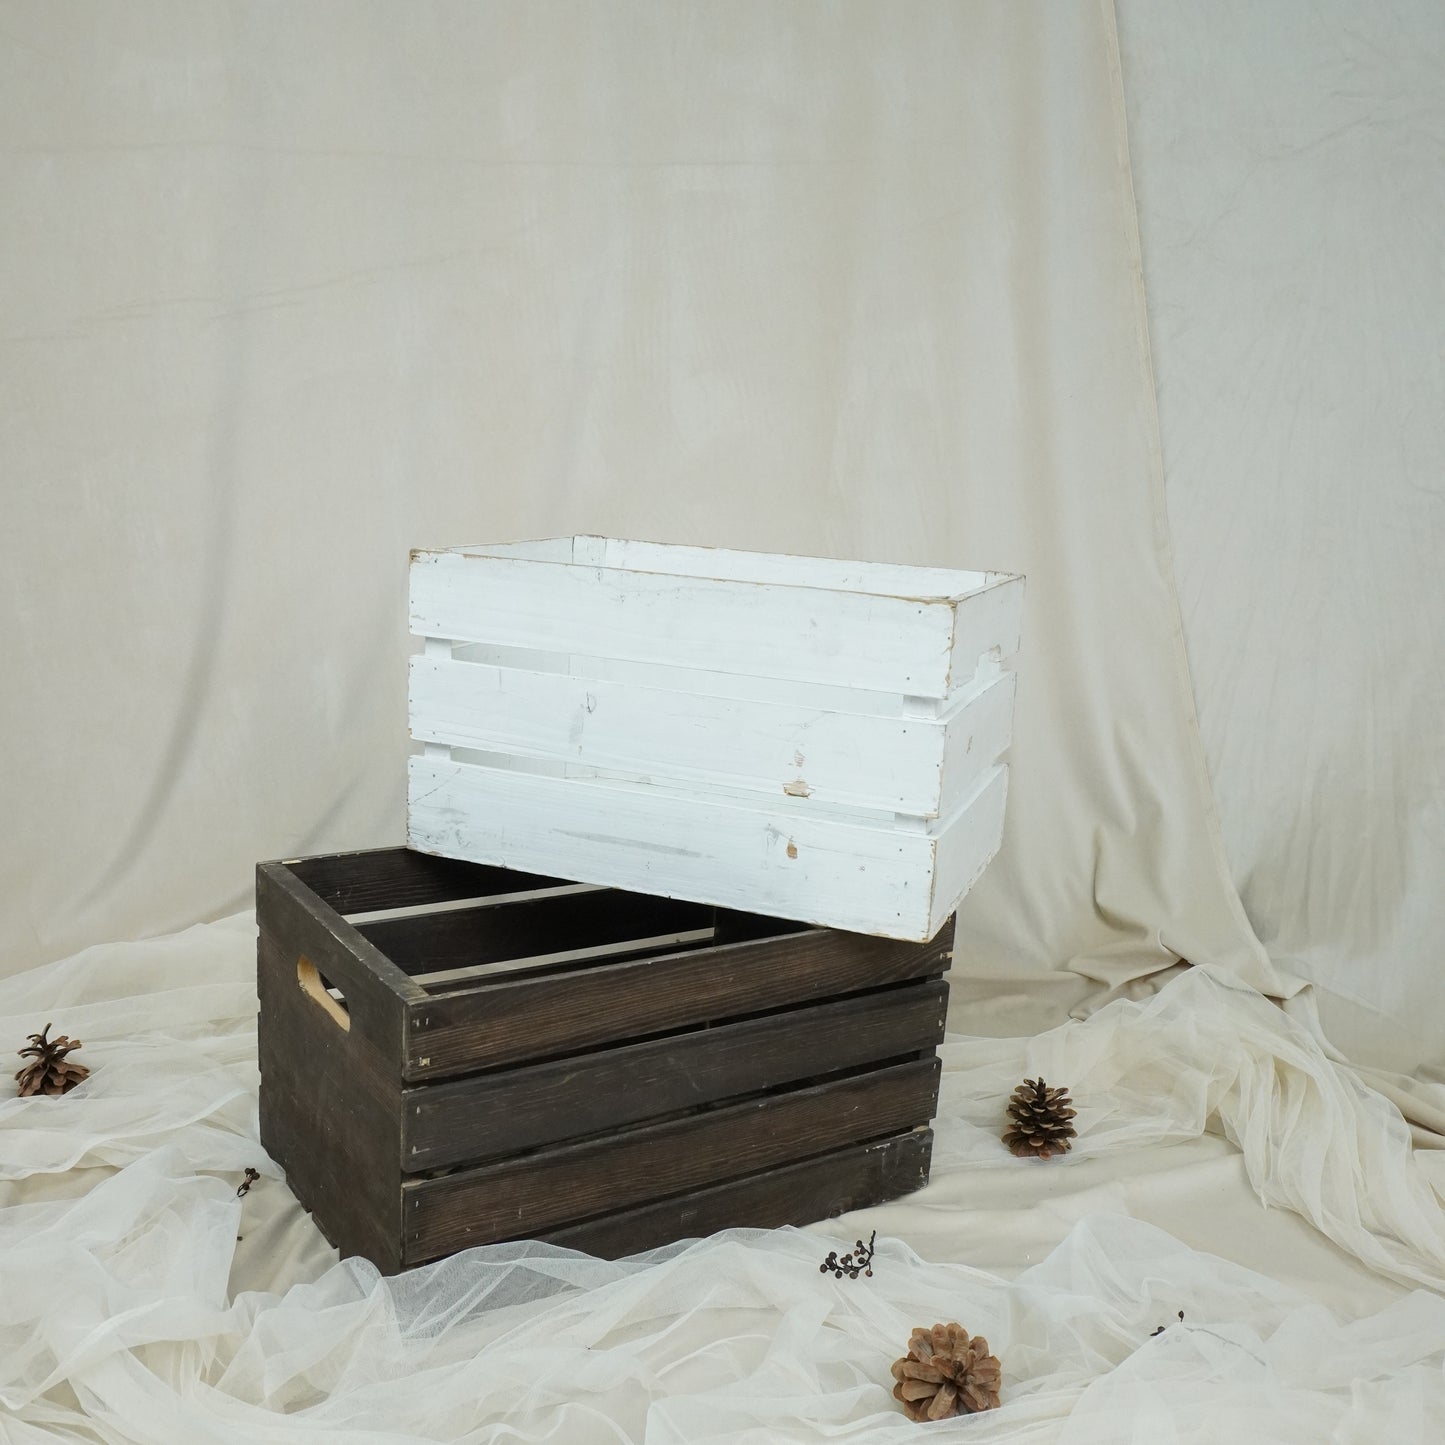 Wood Decorative Box - rental